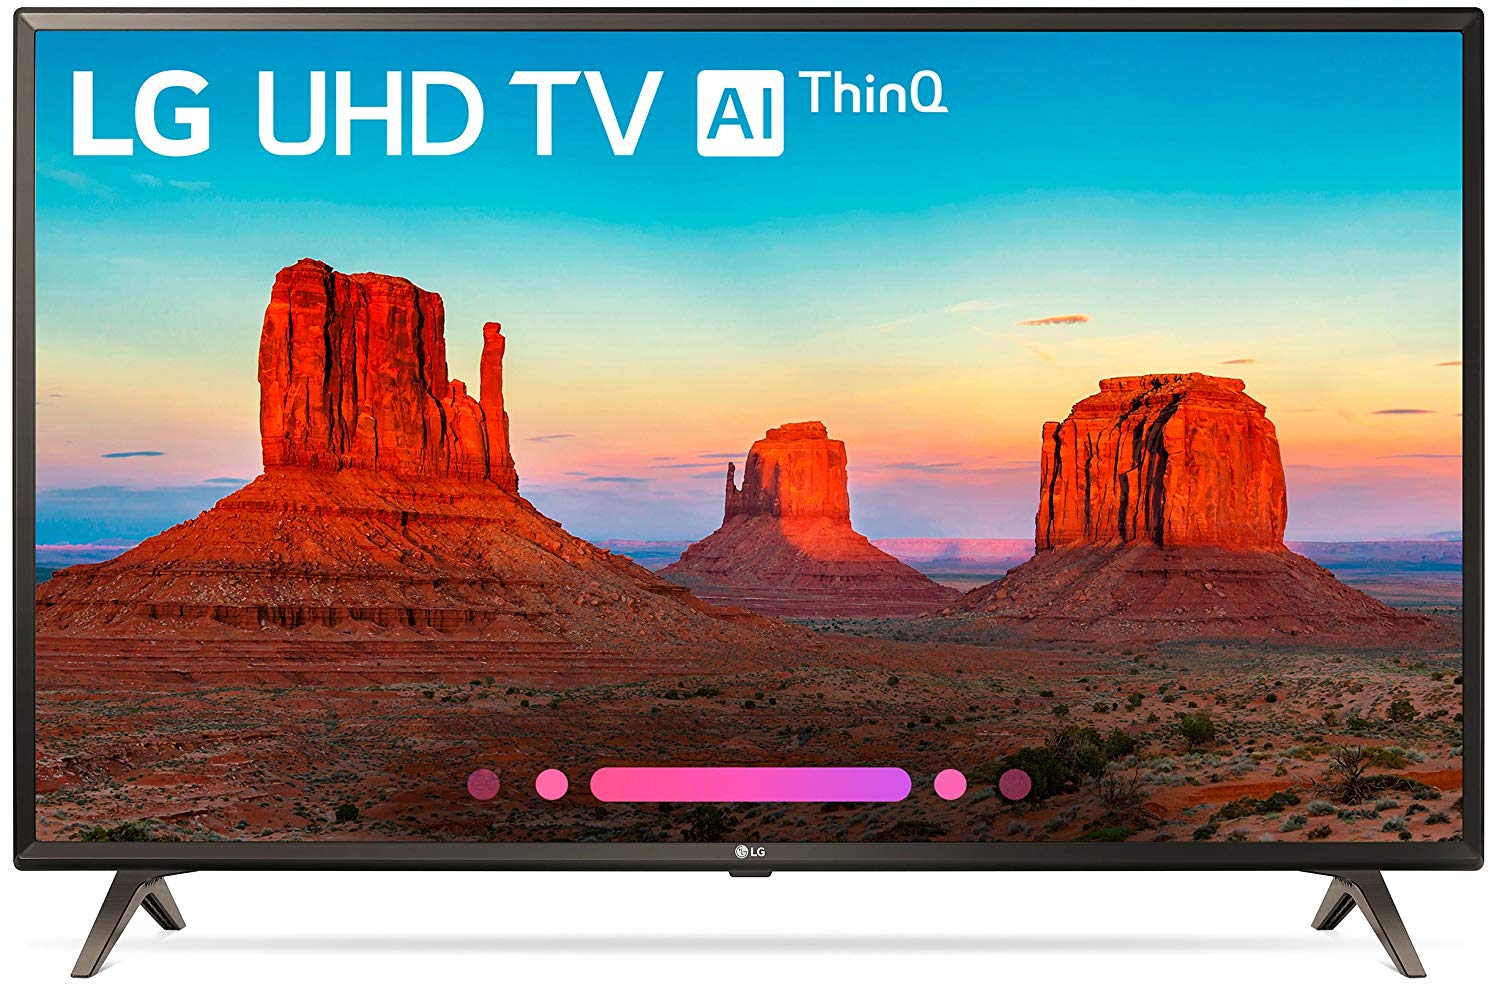 LG 43UK6300PUE 43-Inch 4K Ultra HD Smart LED TV review